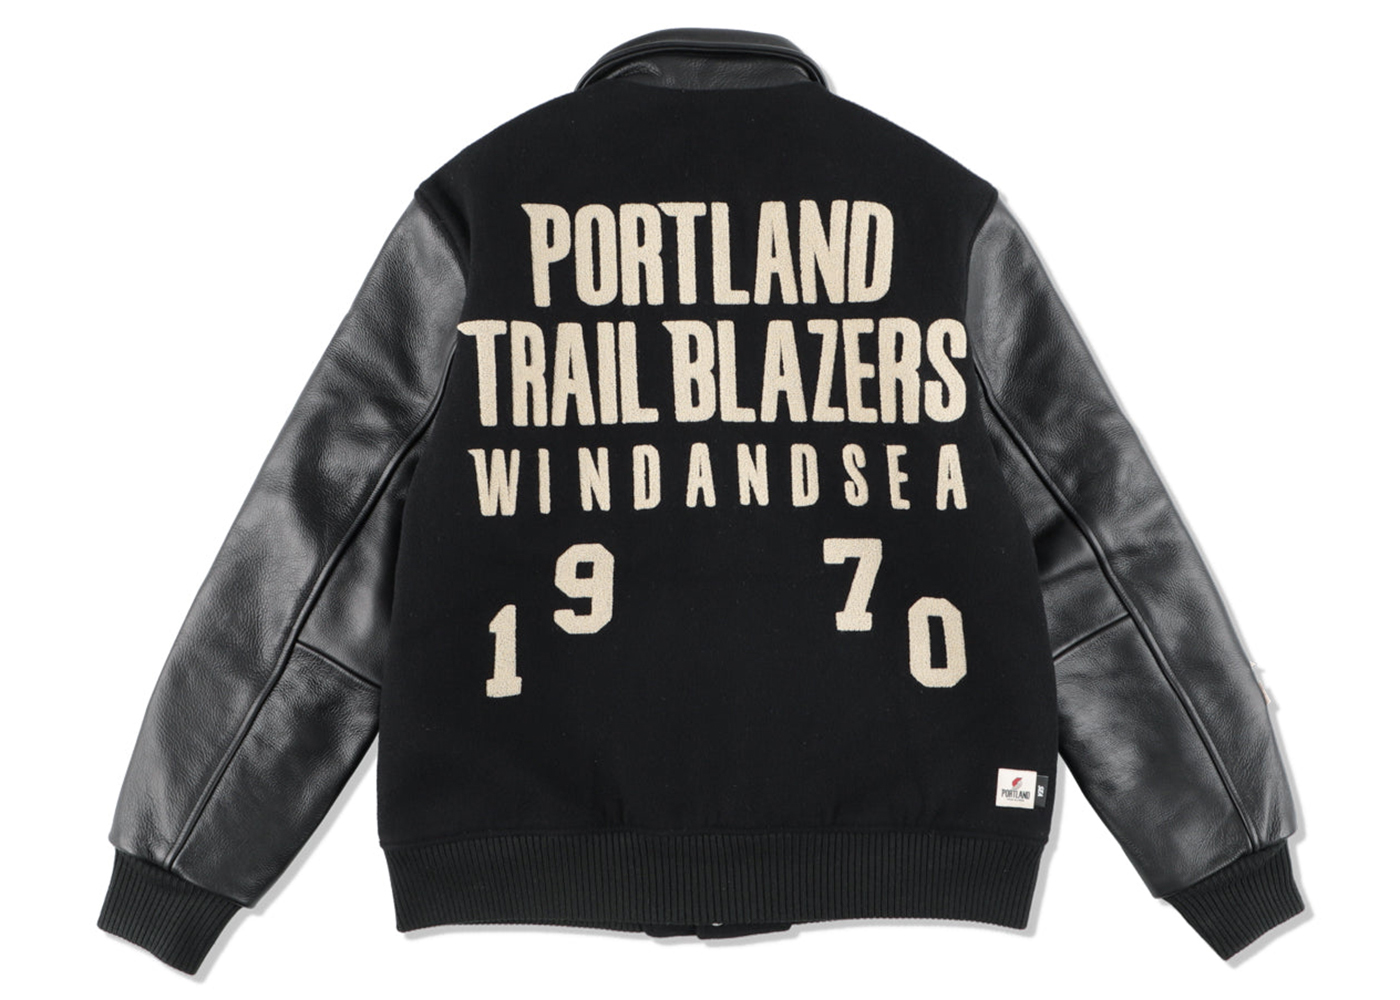 Wind and Sea NBA Leather Melton Jacket Jacket Portland Trail